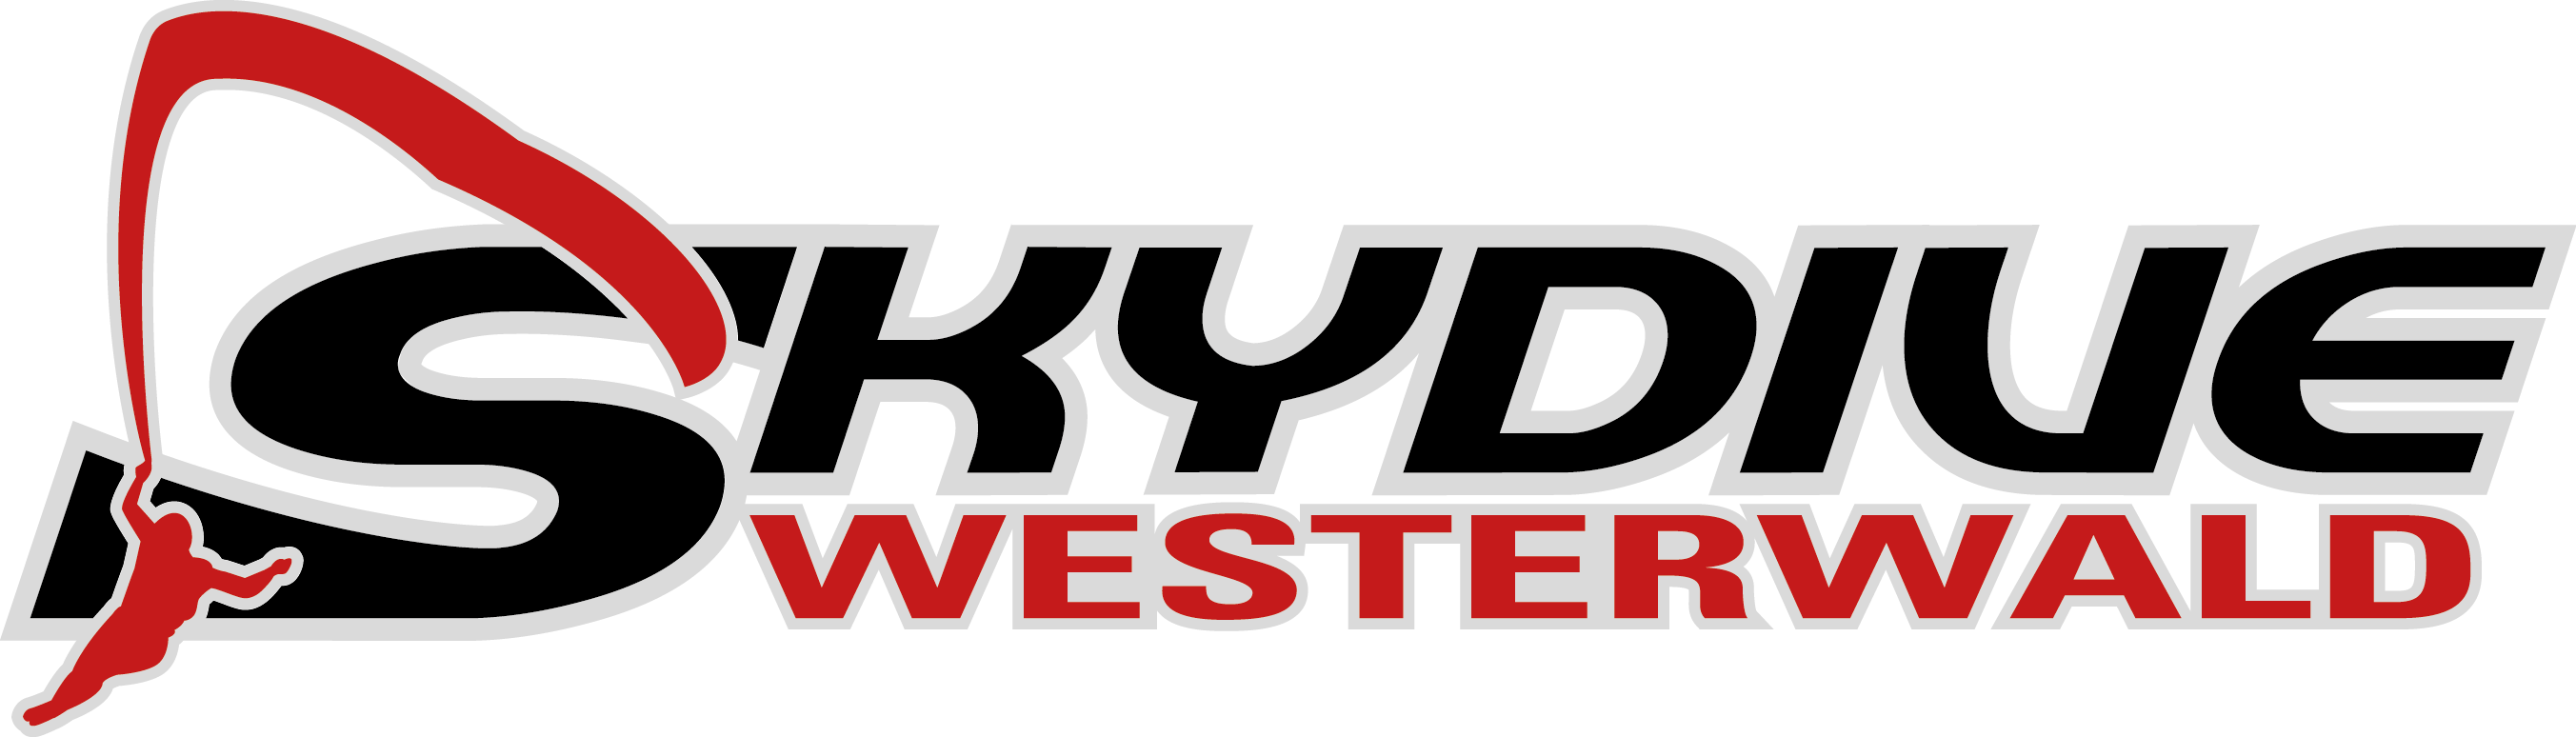 Skydive Westerwald logo